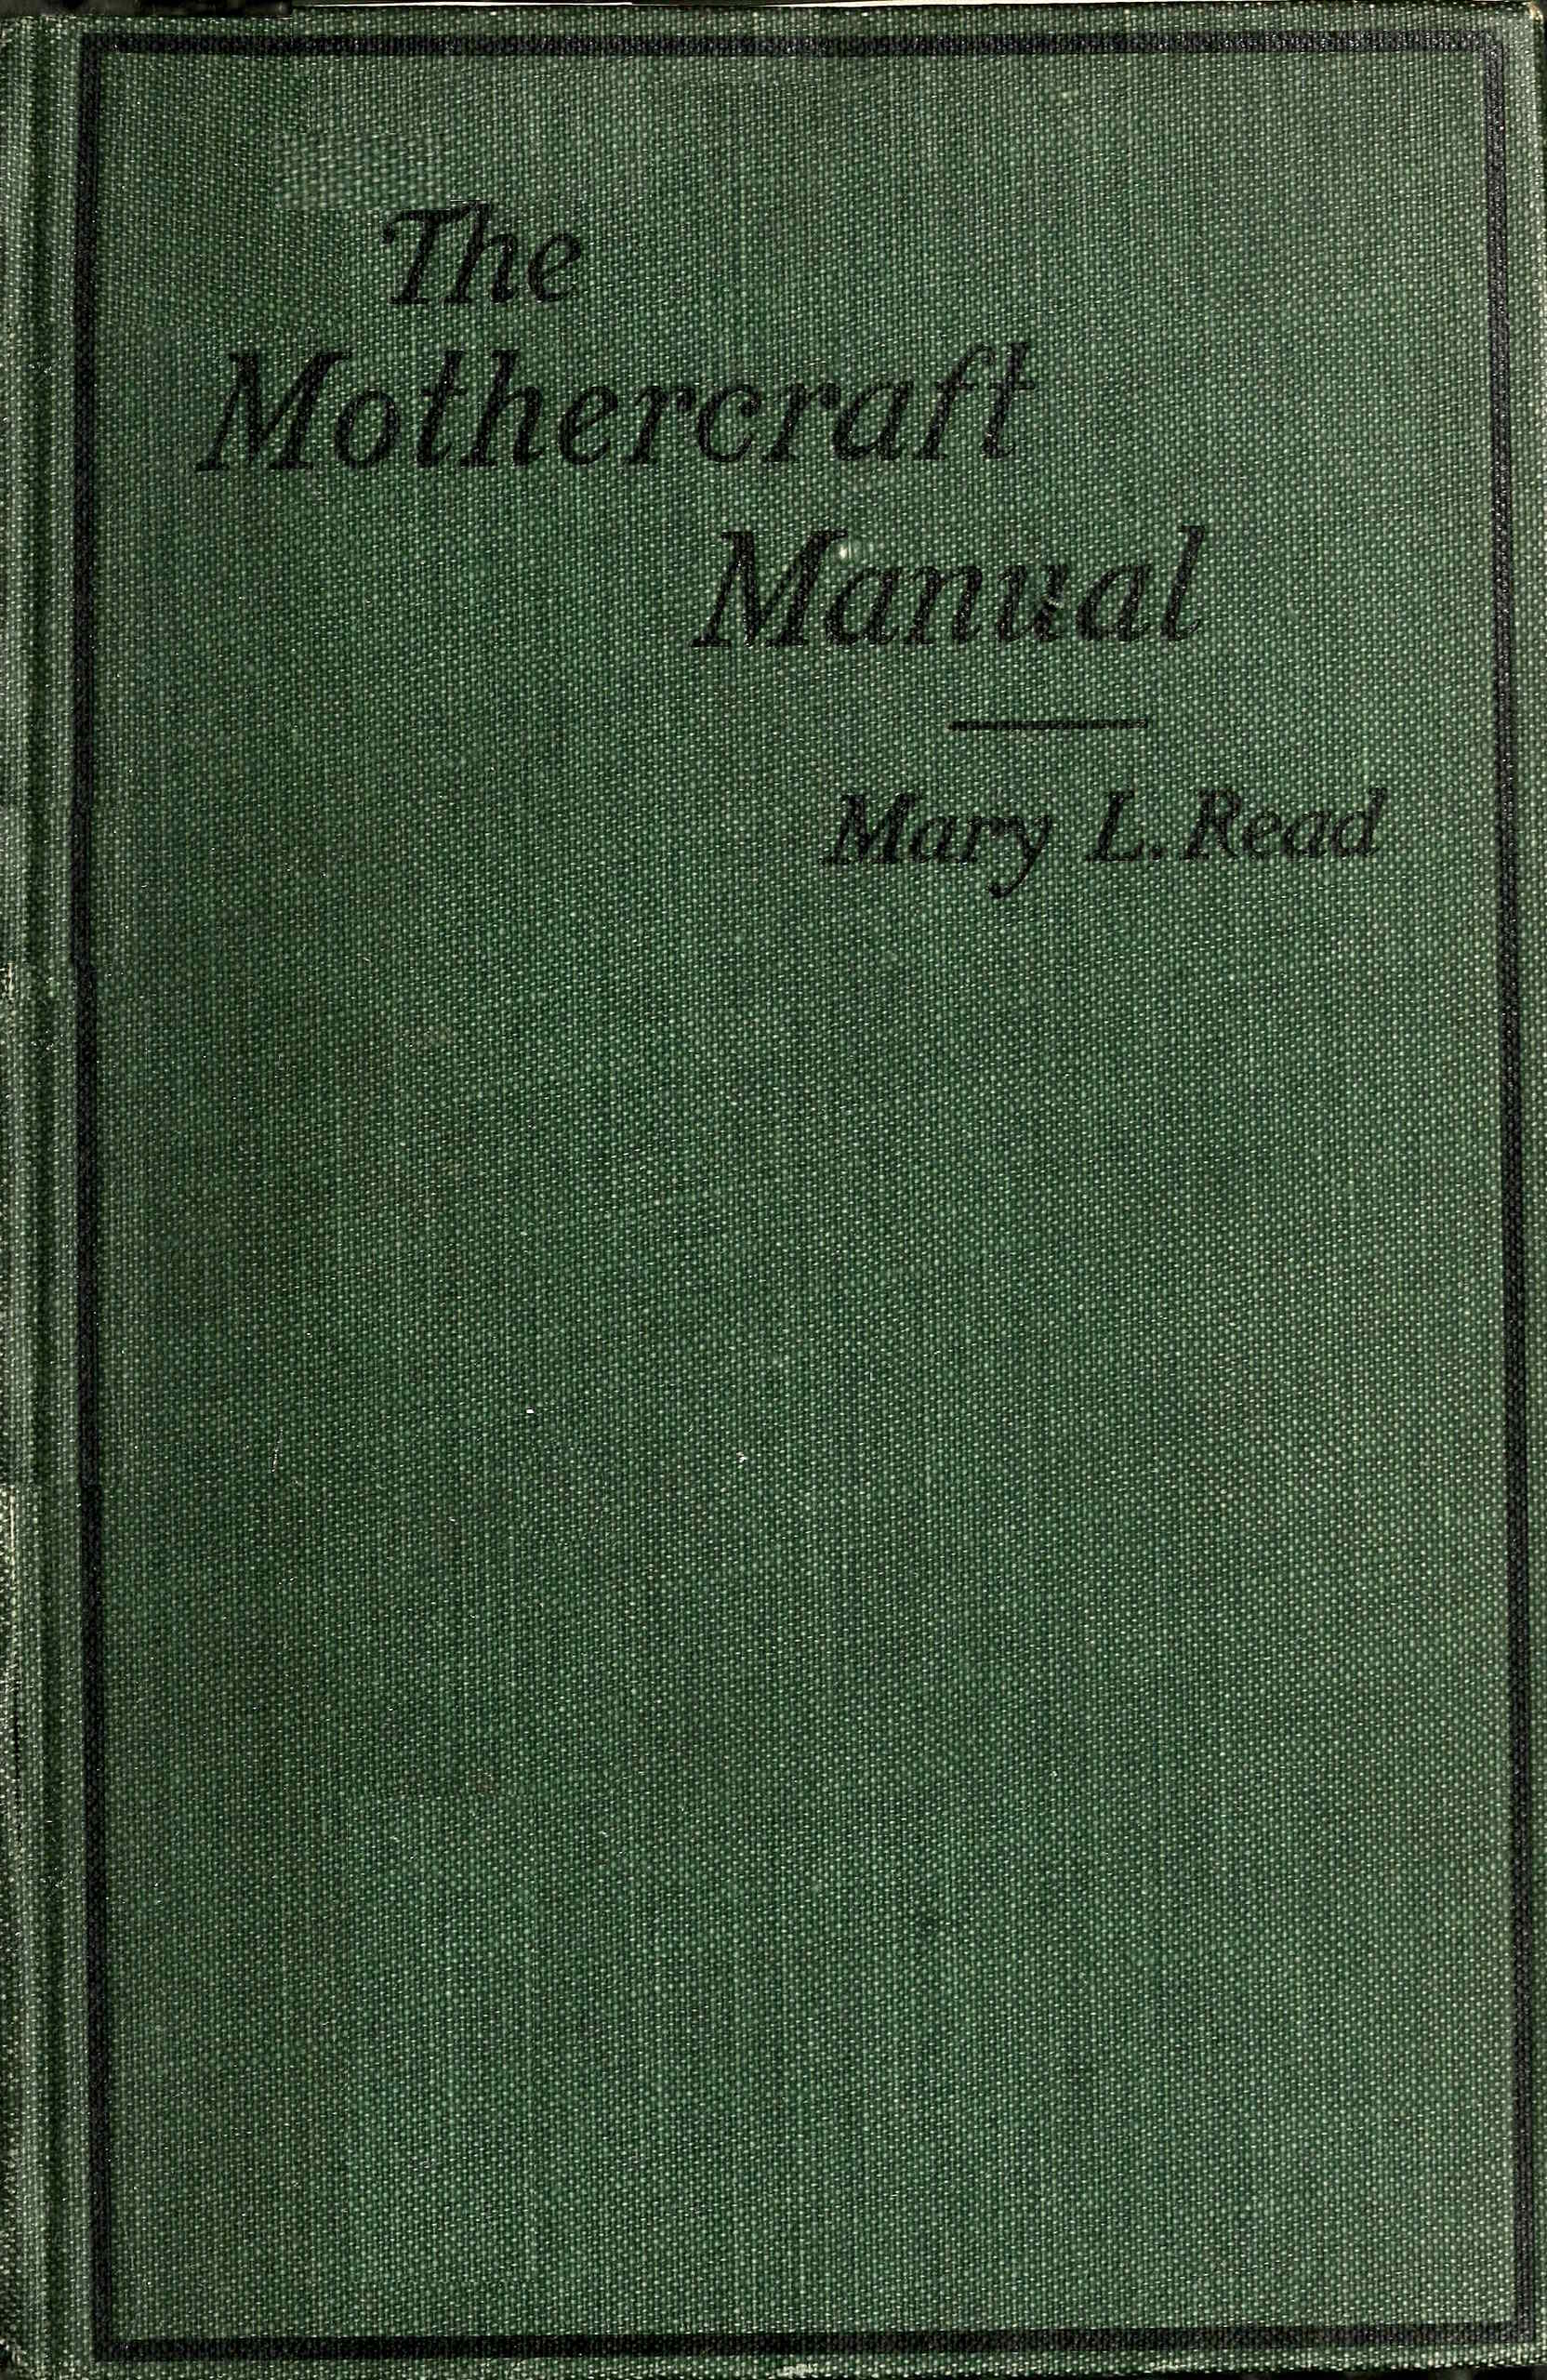 The Mothercraft Manual Project Gutenberg